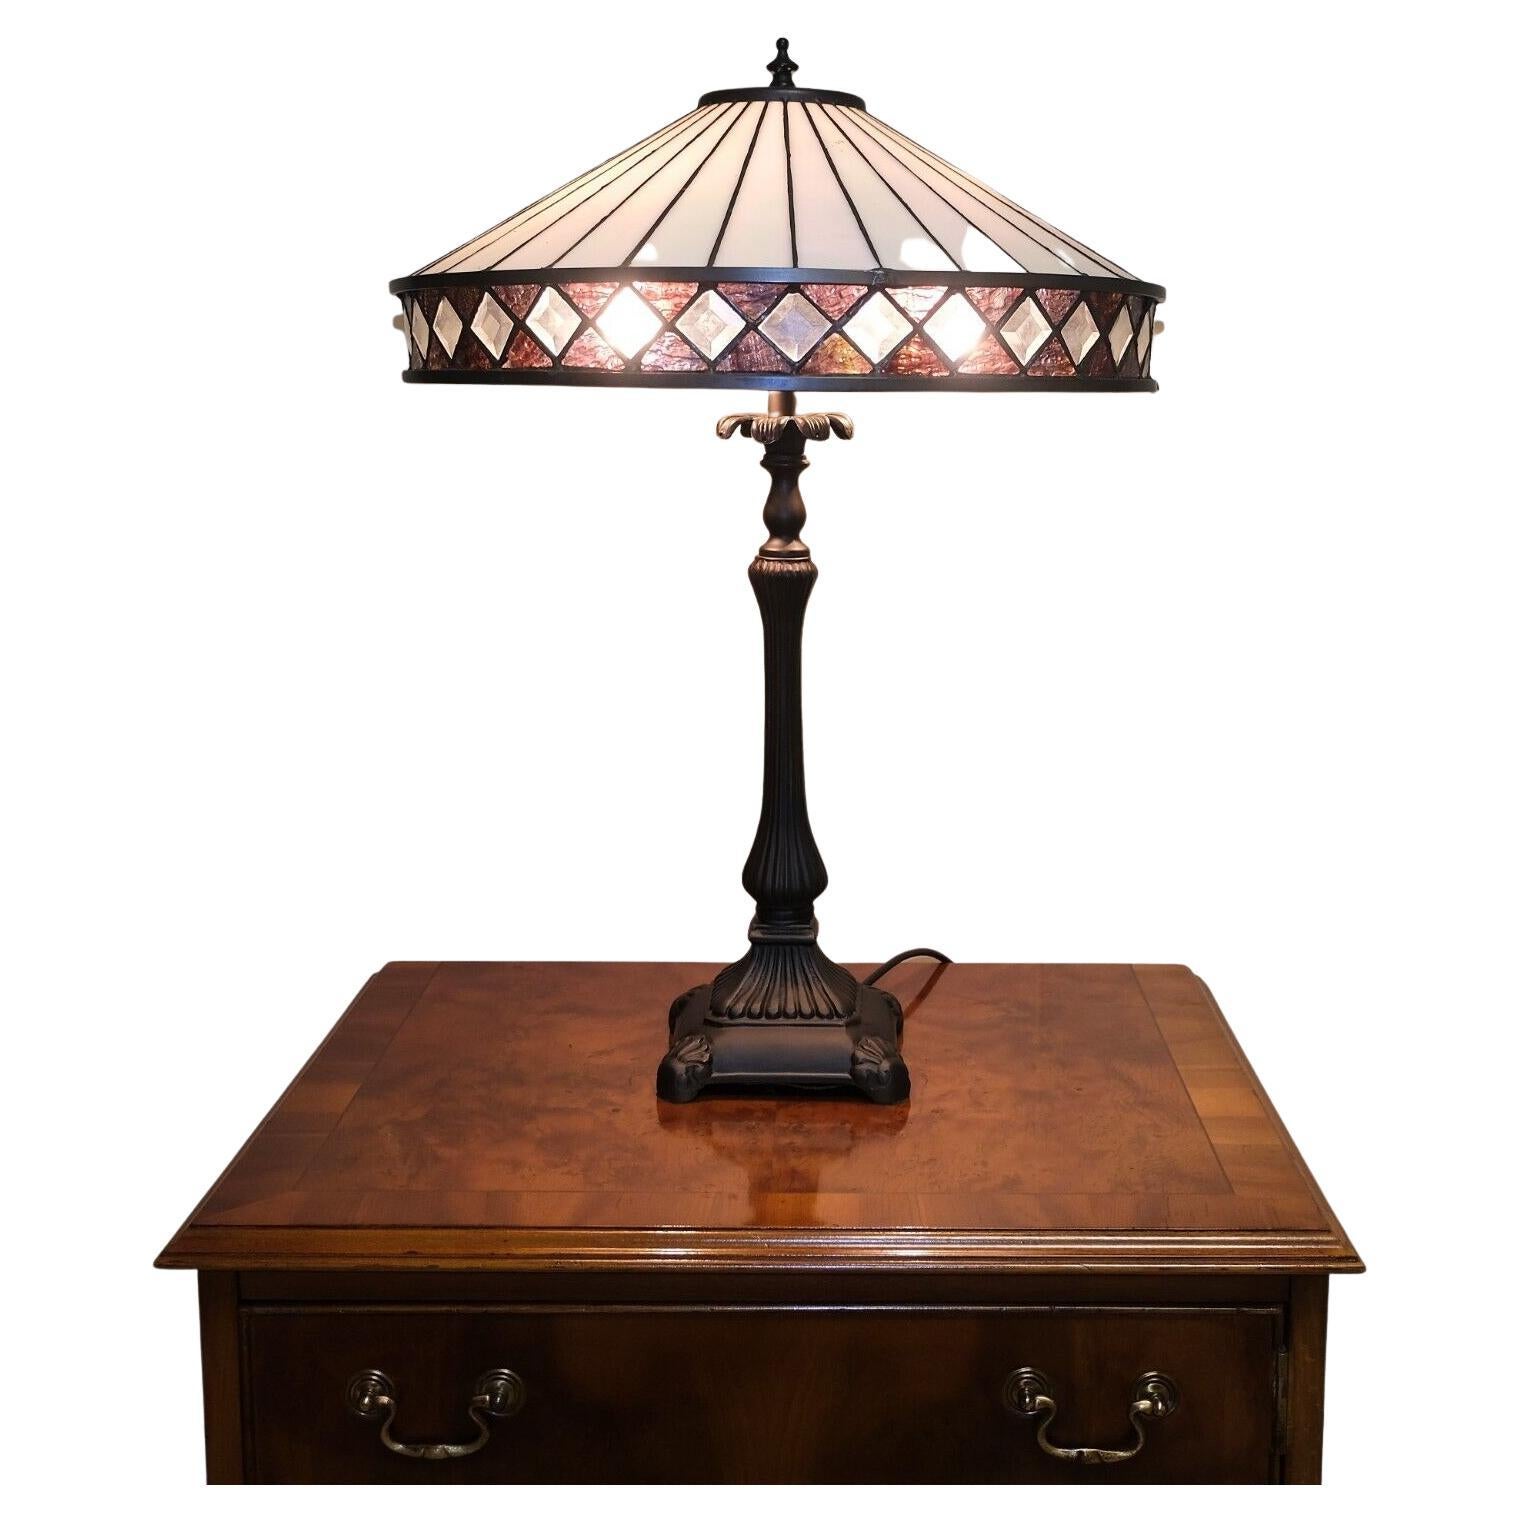 GORGEUSE LAMPE DE TABLE TIFFANY STYLE EN BRONZE COLORÉ DE VERRE DE DIAMANT en vente